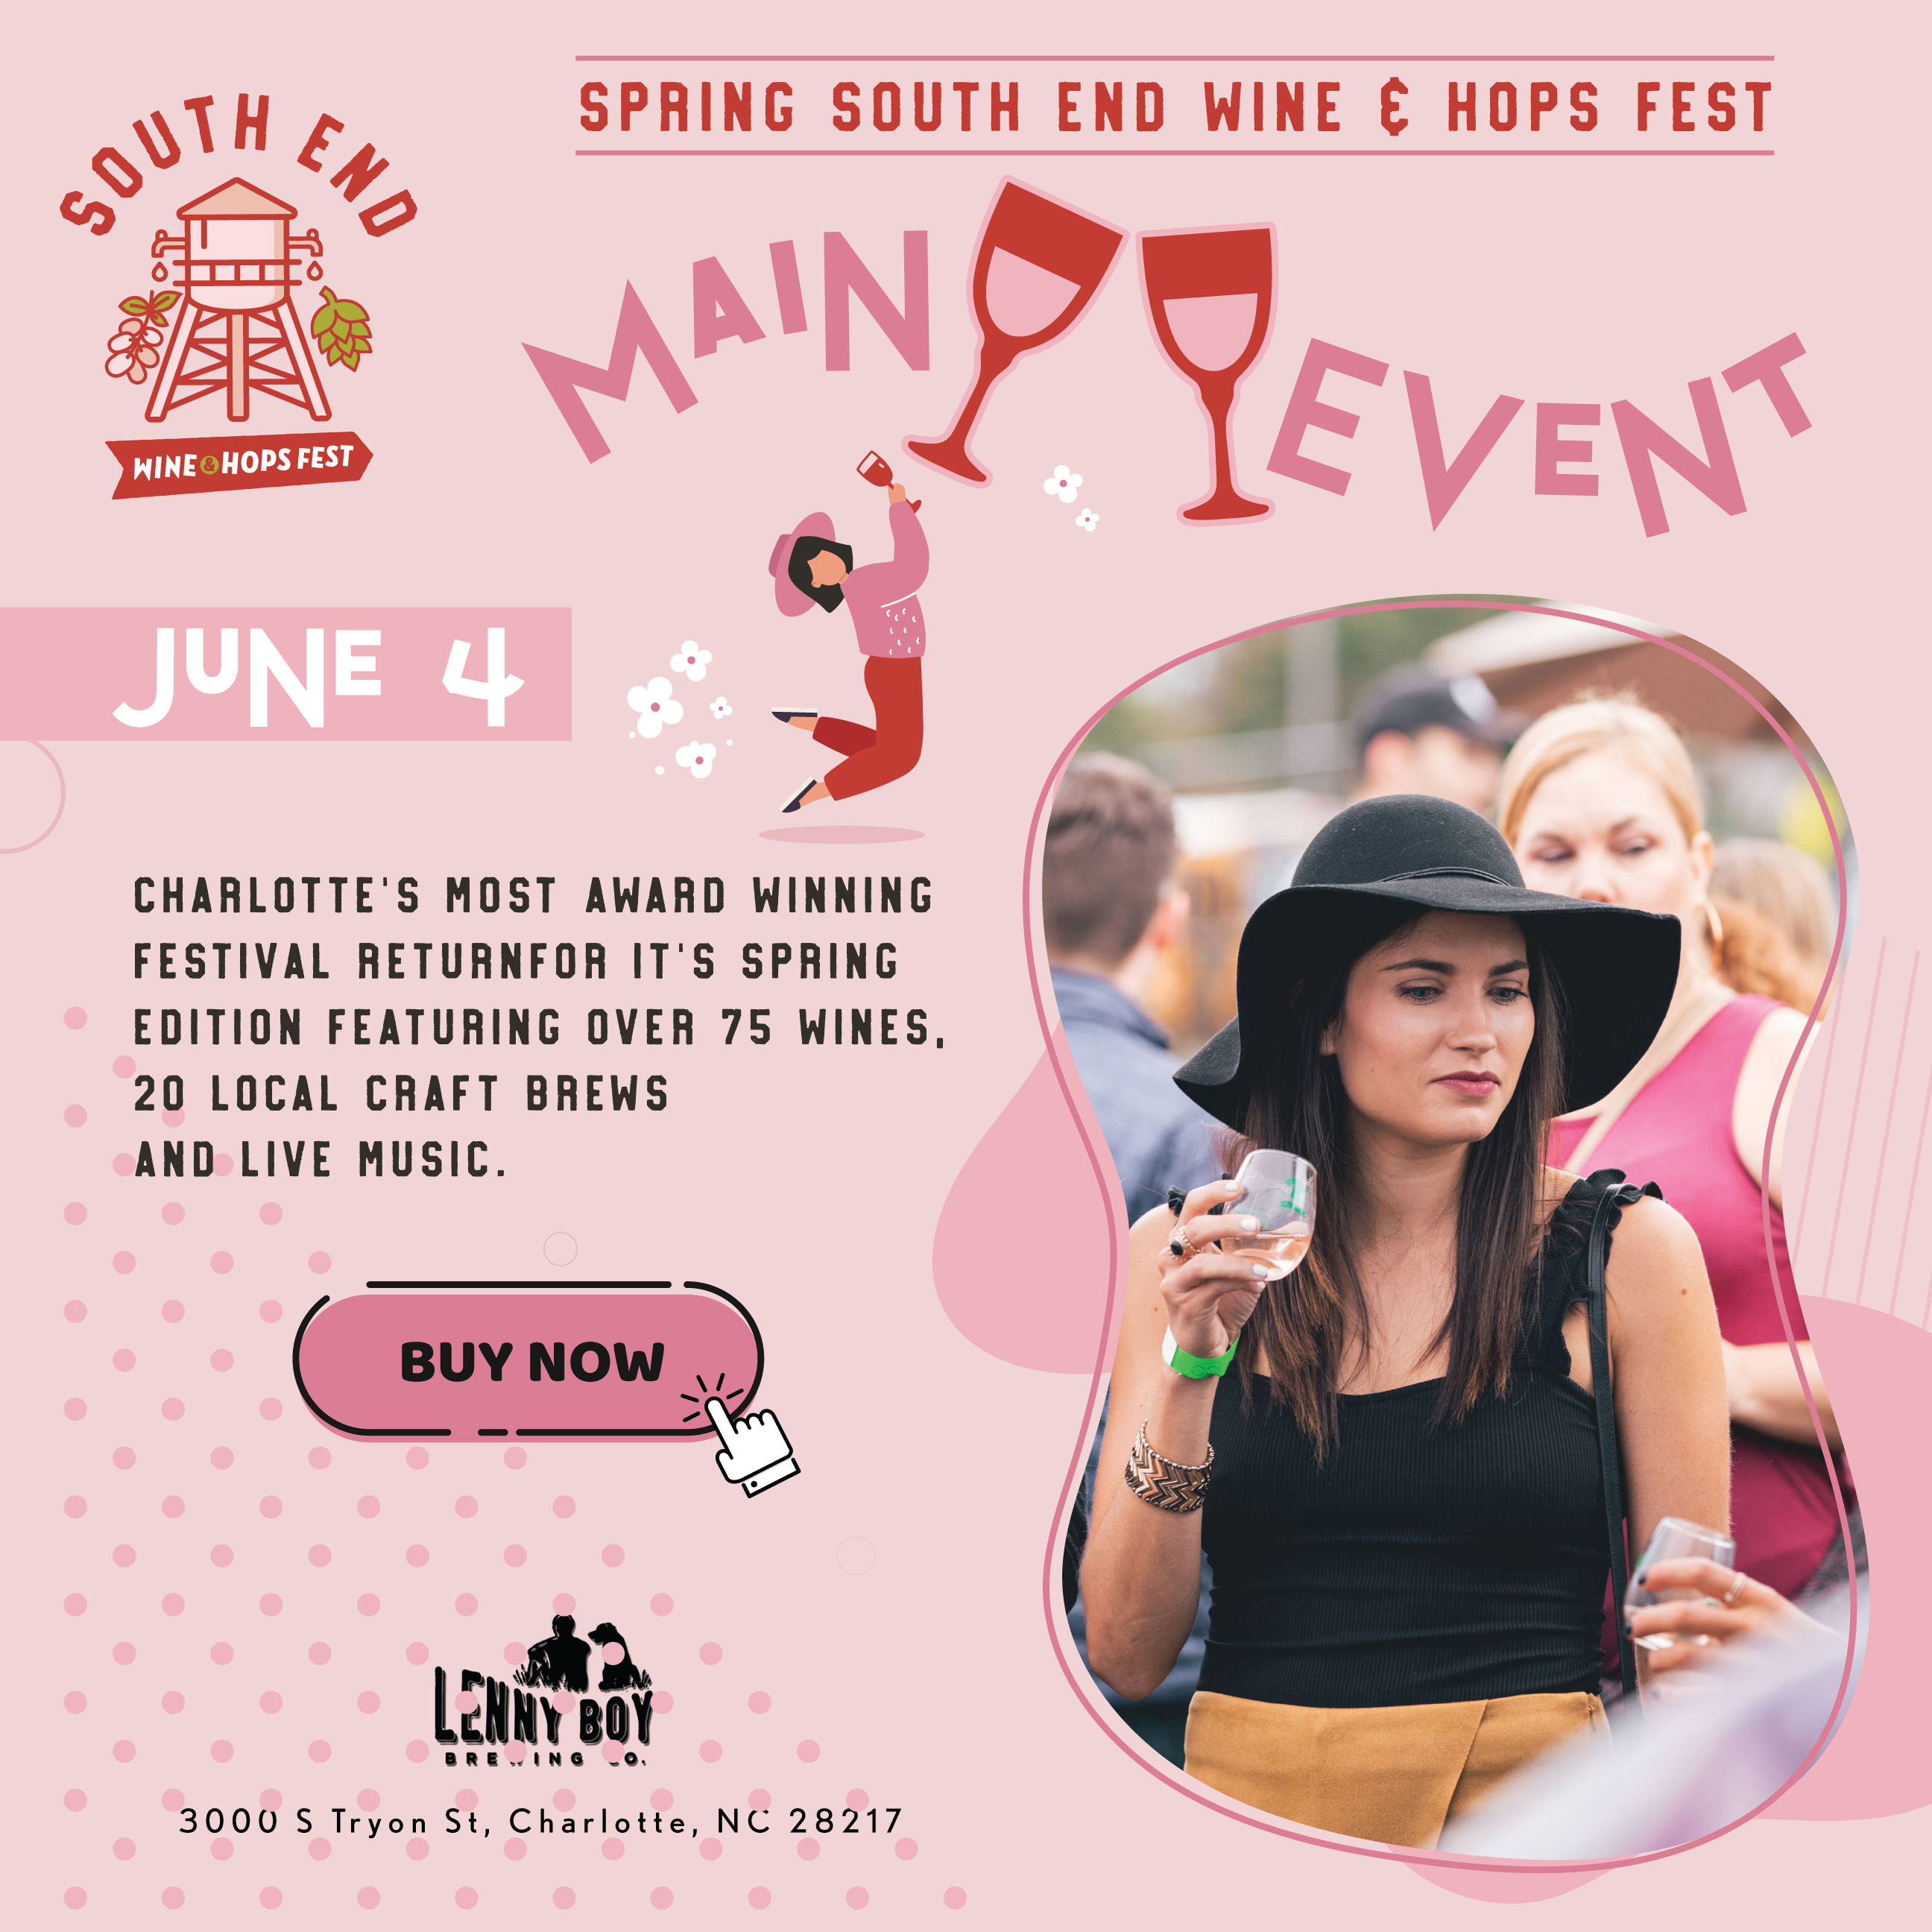 Spring South End Wine & Hops Fest - Main Event